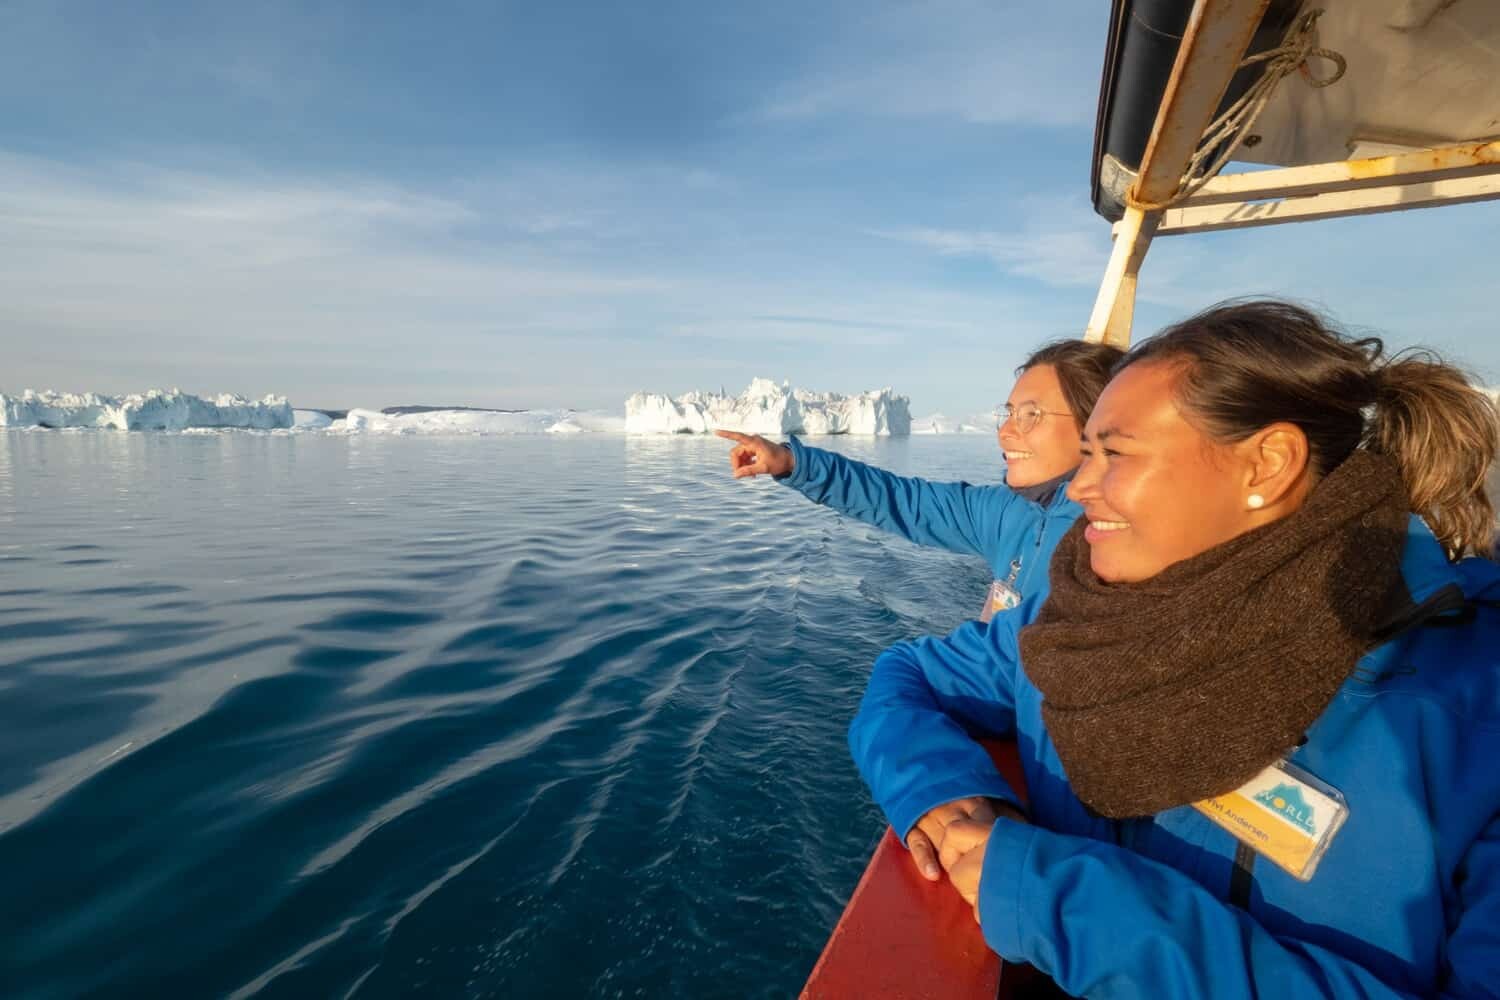 Ilulissat Greenland Photography Locations